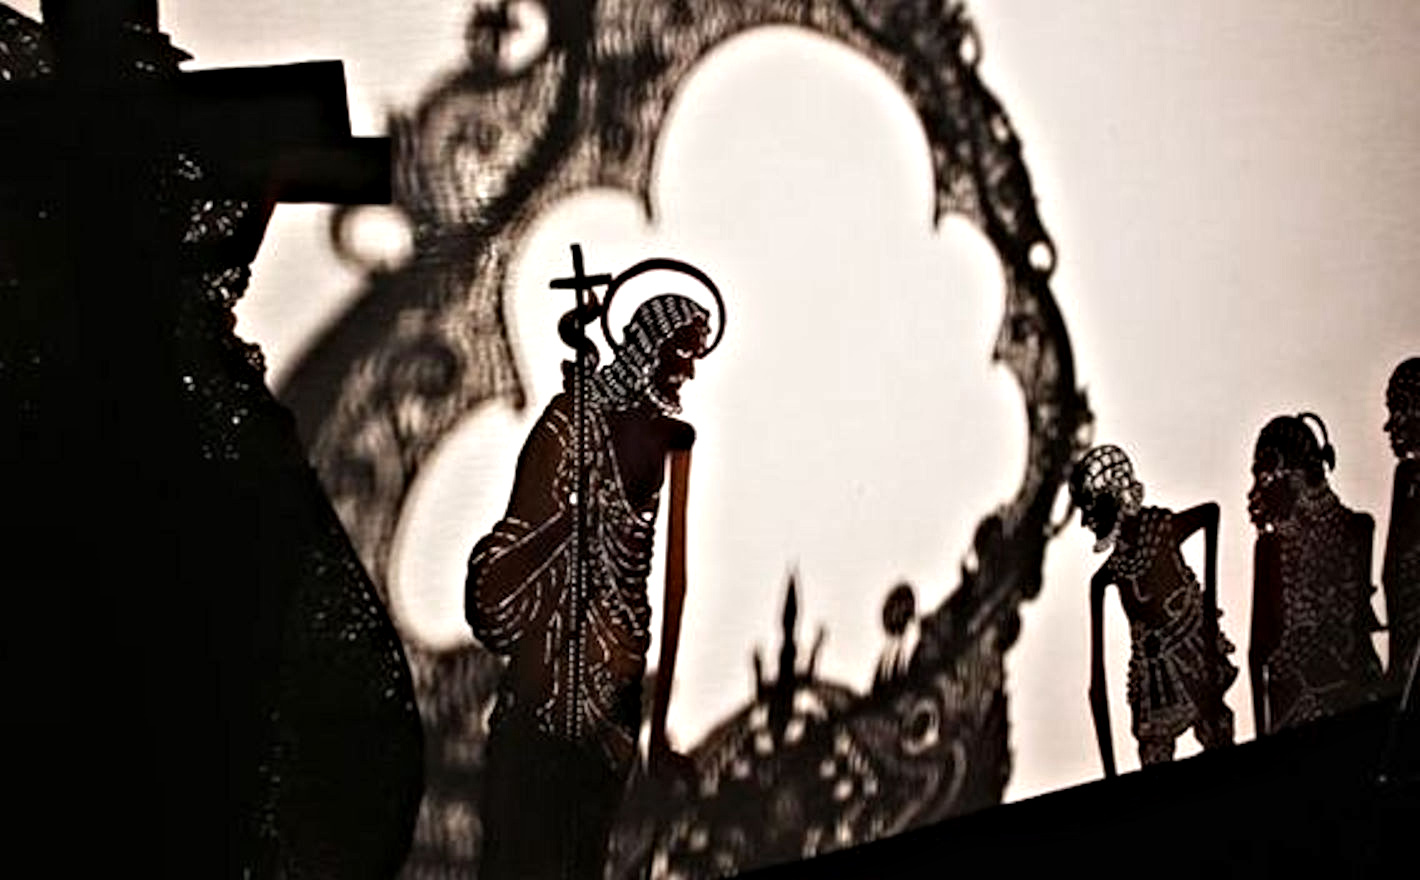  scene of Wayang Wahyu (Revelation shadow play) of the Saint Paul Story held in the Easter season in 2012 at Solo. (Image from: http://www.hidupkatolik.com/2012/04/18/solo-jawa-tengah-wayang-wahyu-paulus.